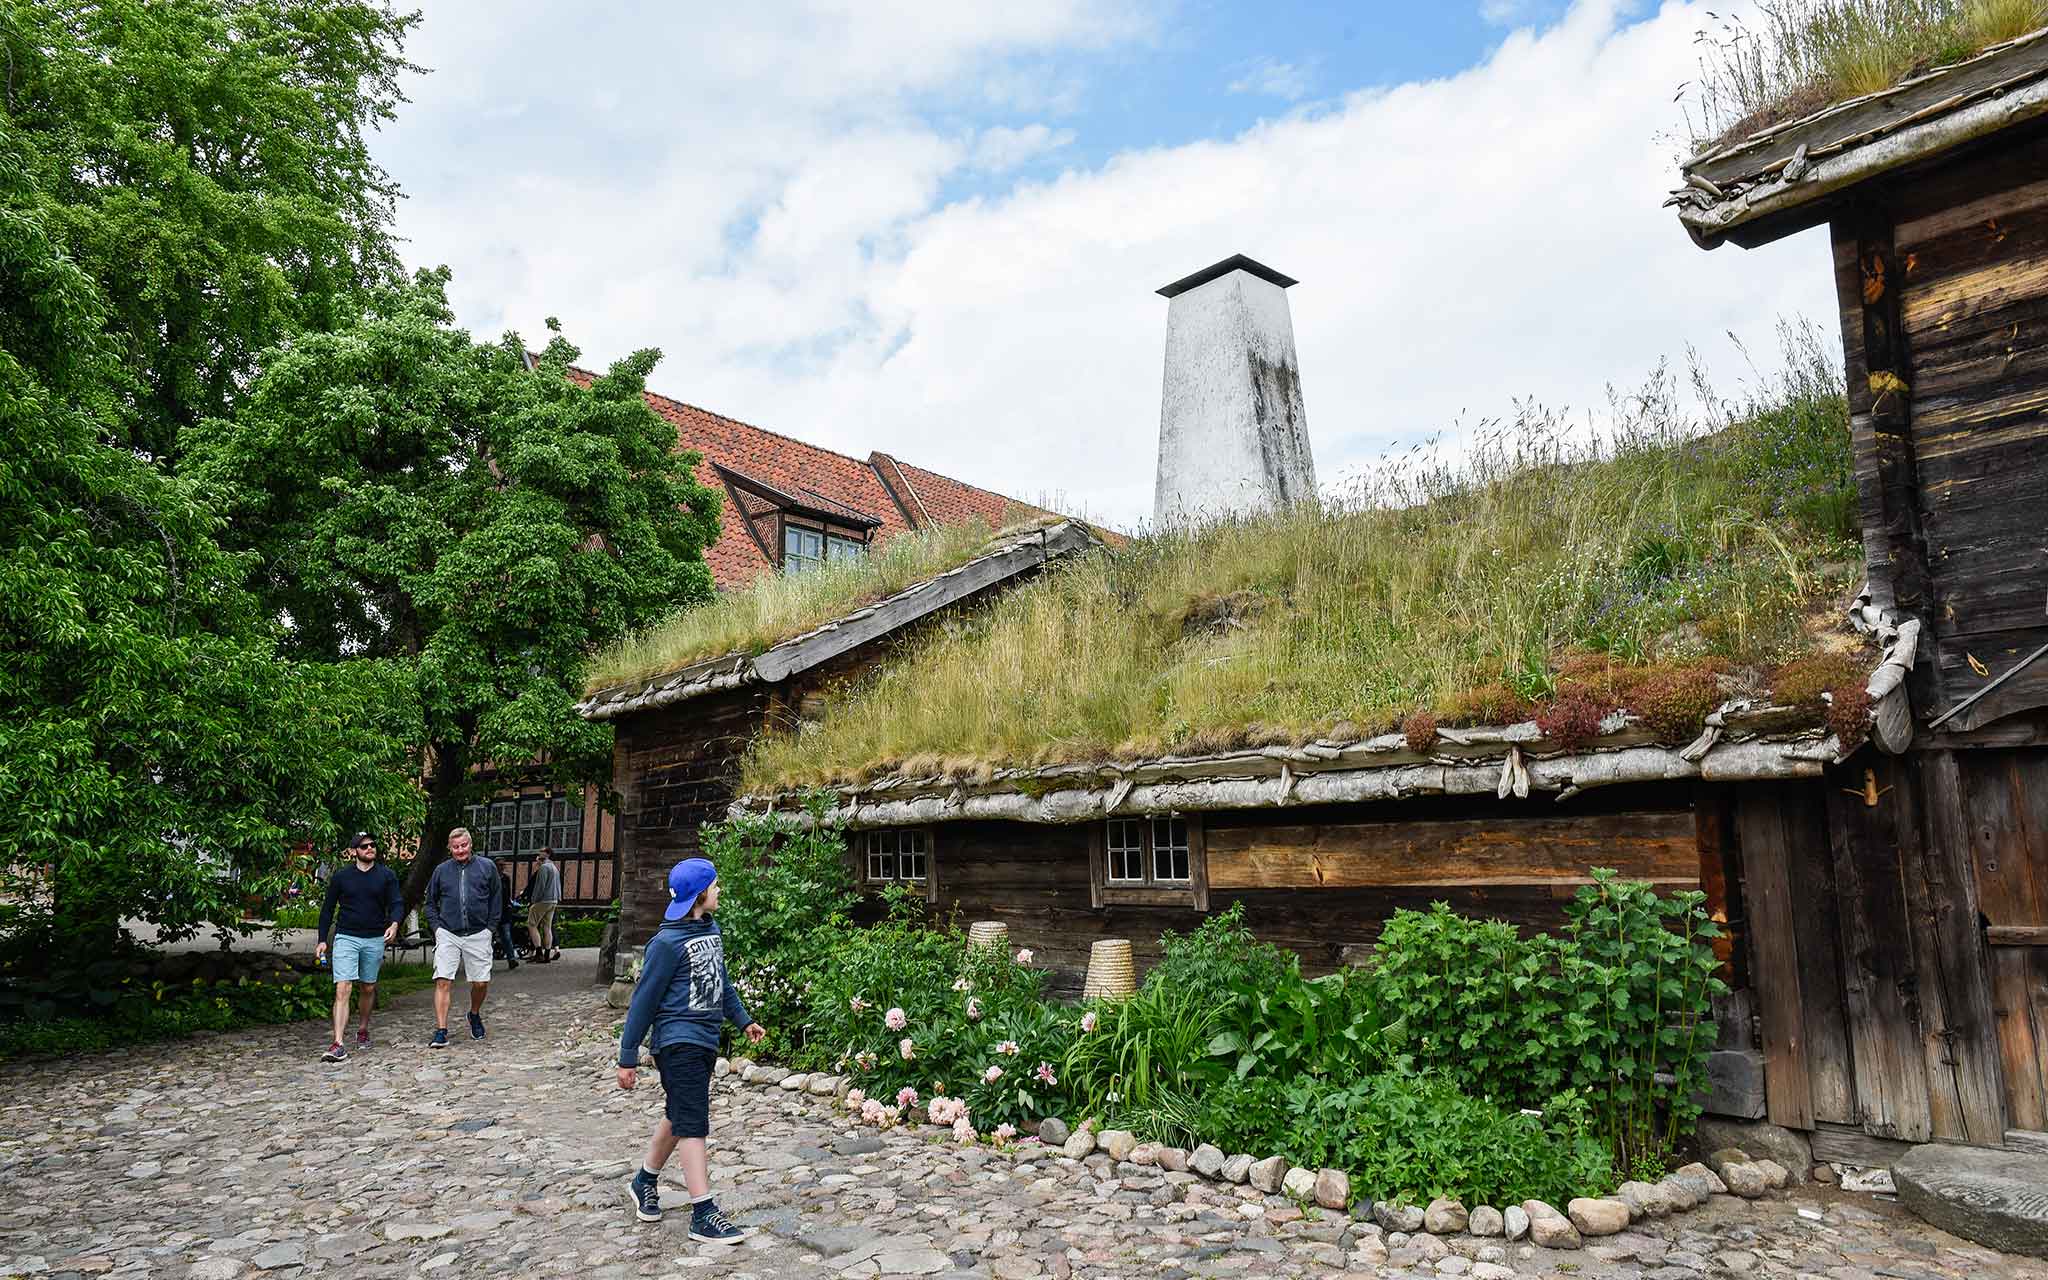 The Blekinge Farm House at Kulturen in Lund. Photo: Viveca Ohlsson/Kulturen